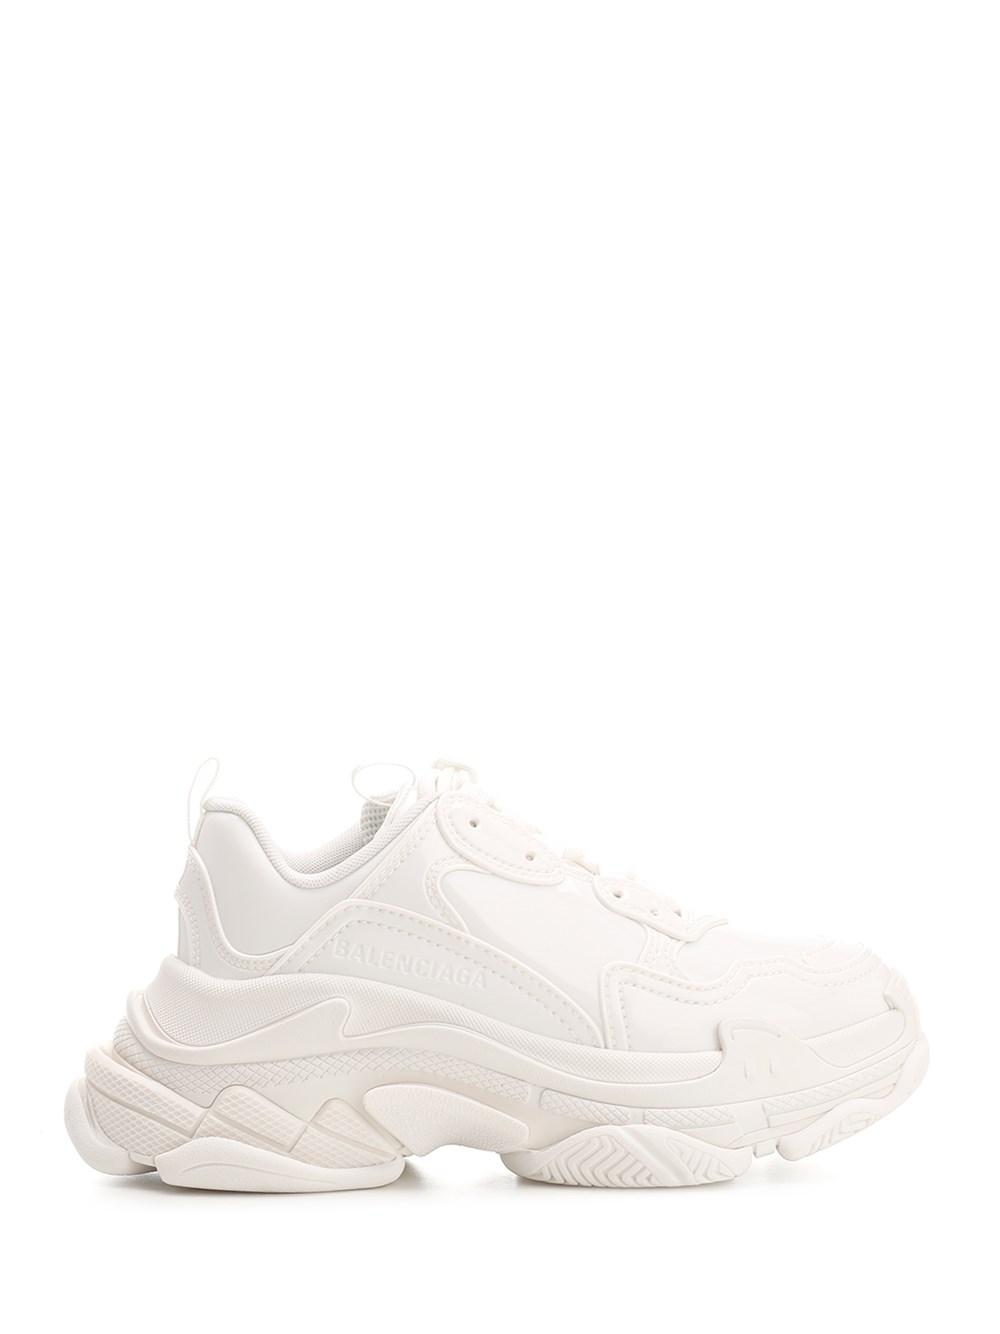 Balenciaga "triple S" Sneakers in White | Lyst